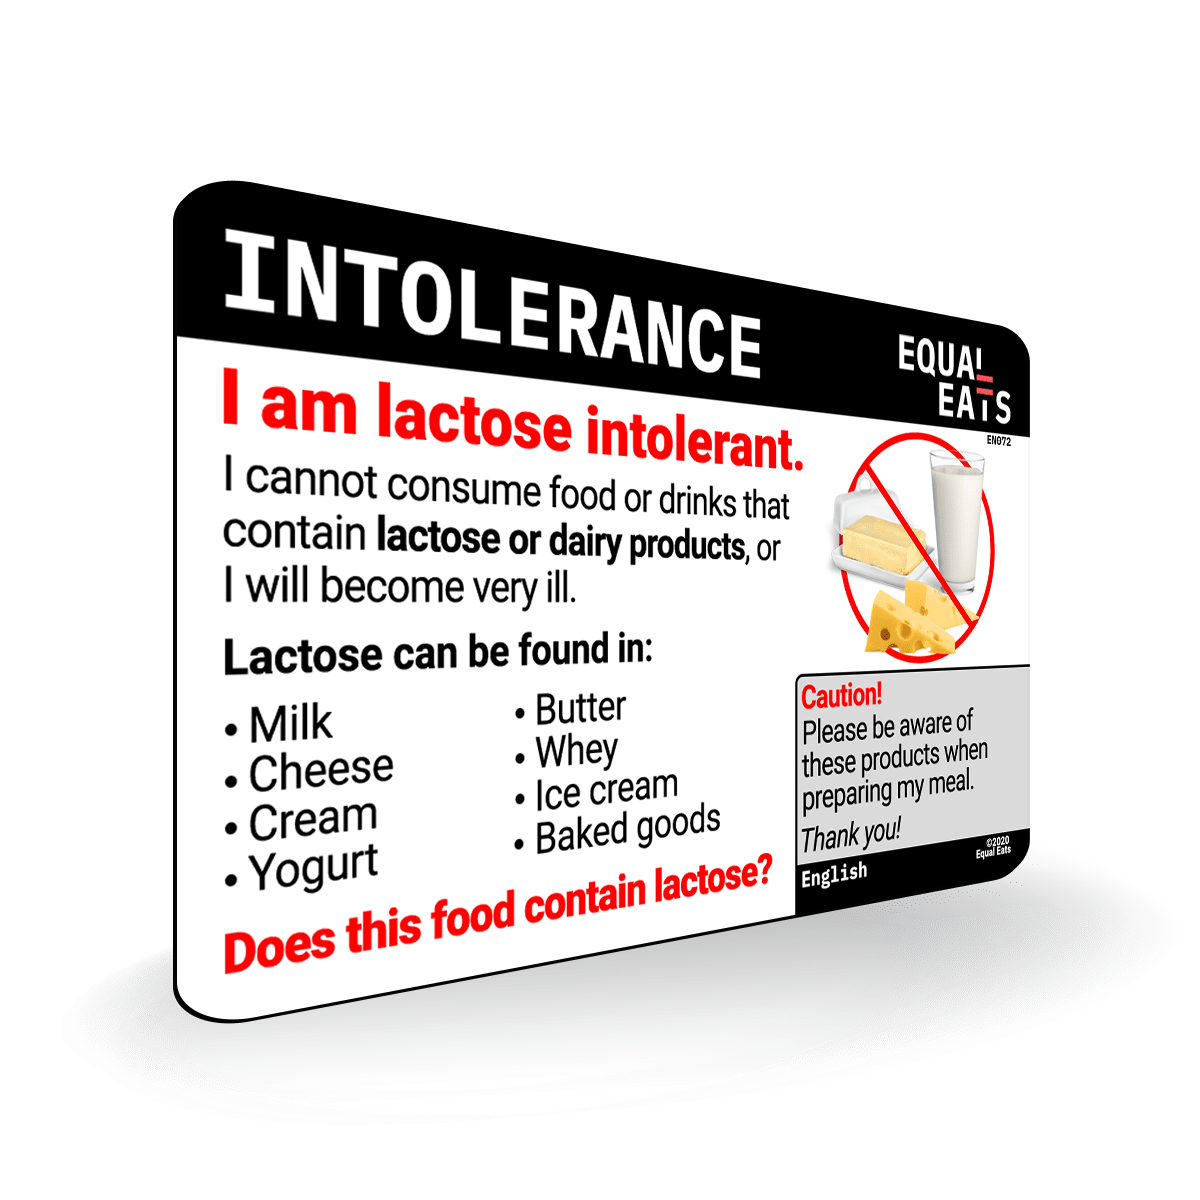 Lactose Intolerance Card - Equal Eats Lactose Intolerance Translation